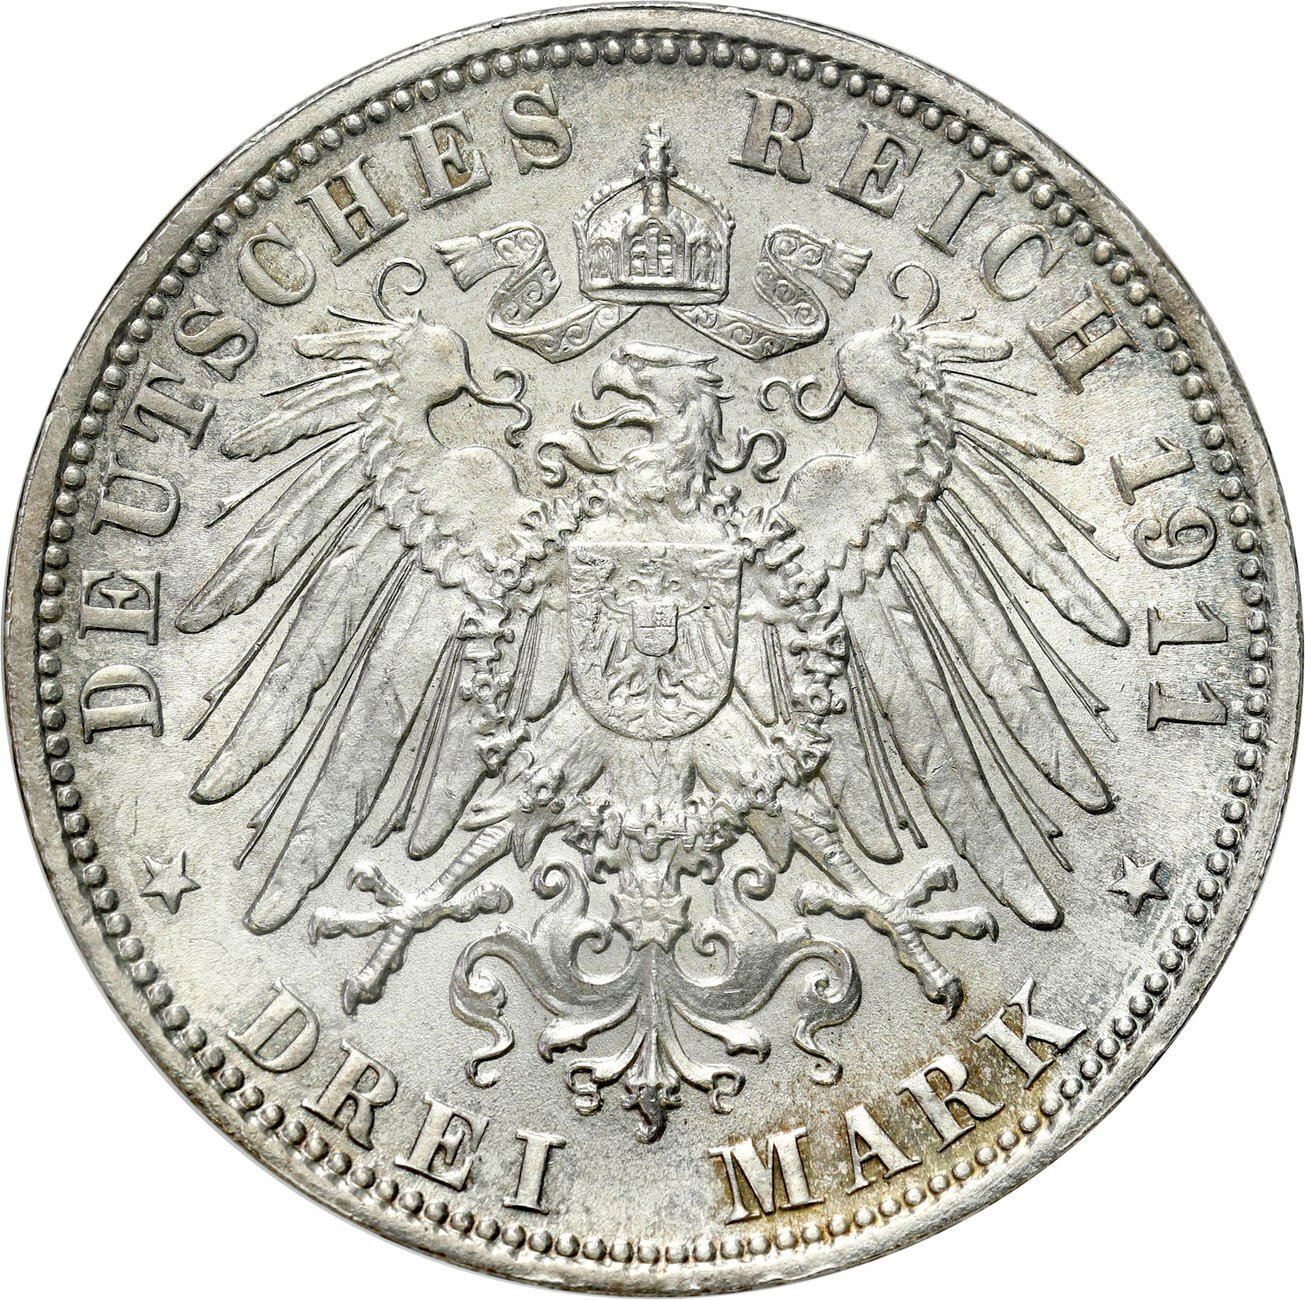 Niemcy, Bawaria. 3 marki 1911 D, Monachium, Luitpold – PIĘKNE